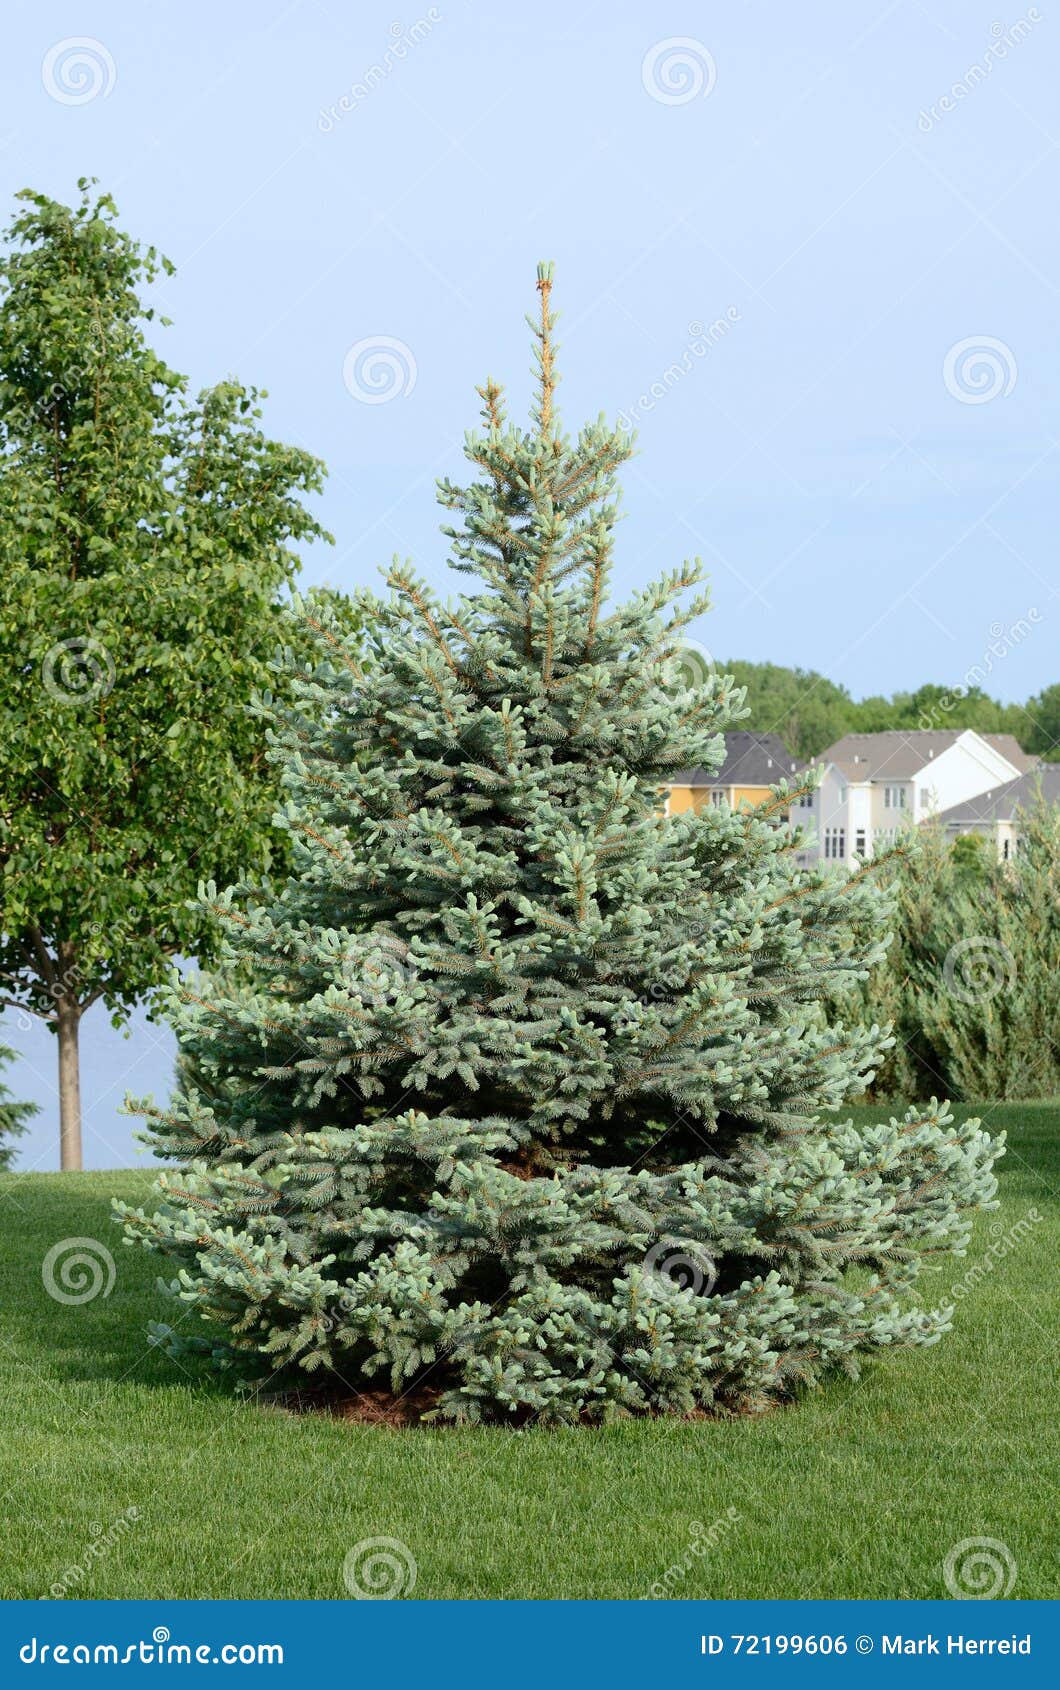 a blue spruce tree